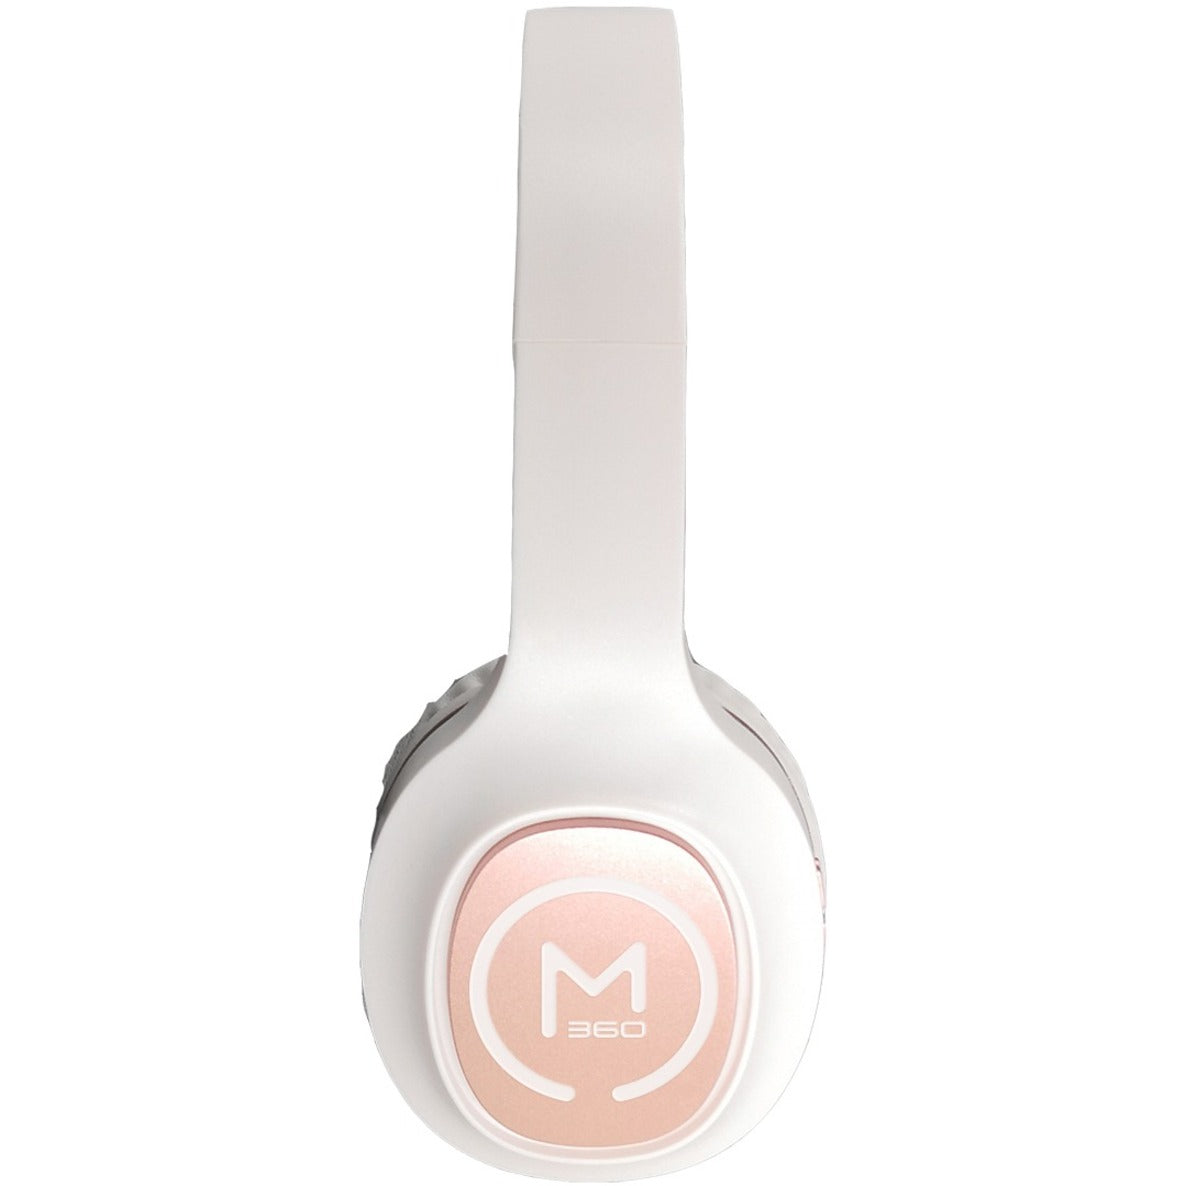 Morpheus 360 HP4500R Wireless Headphone, White/Rose Gold, Comfortable Over-the-Head Design